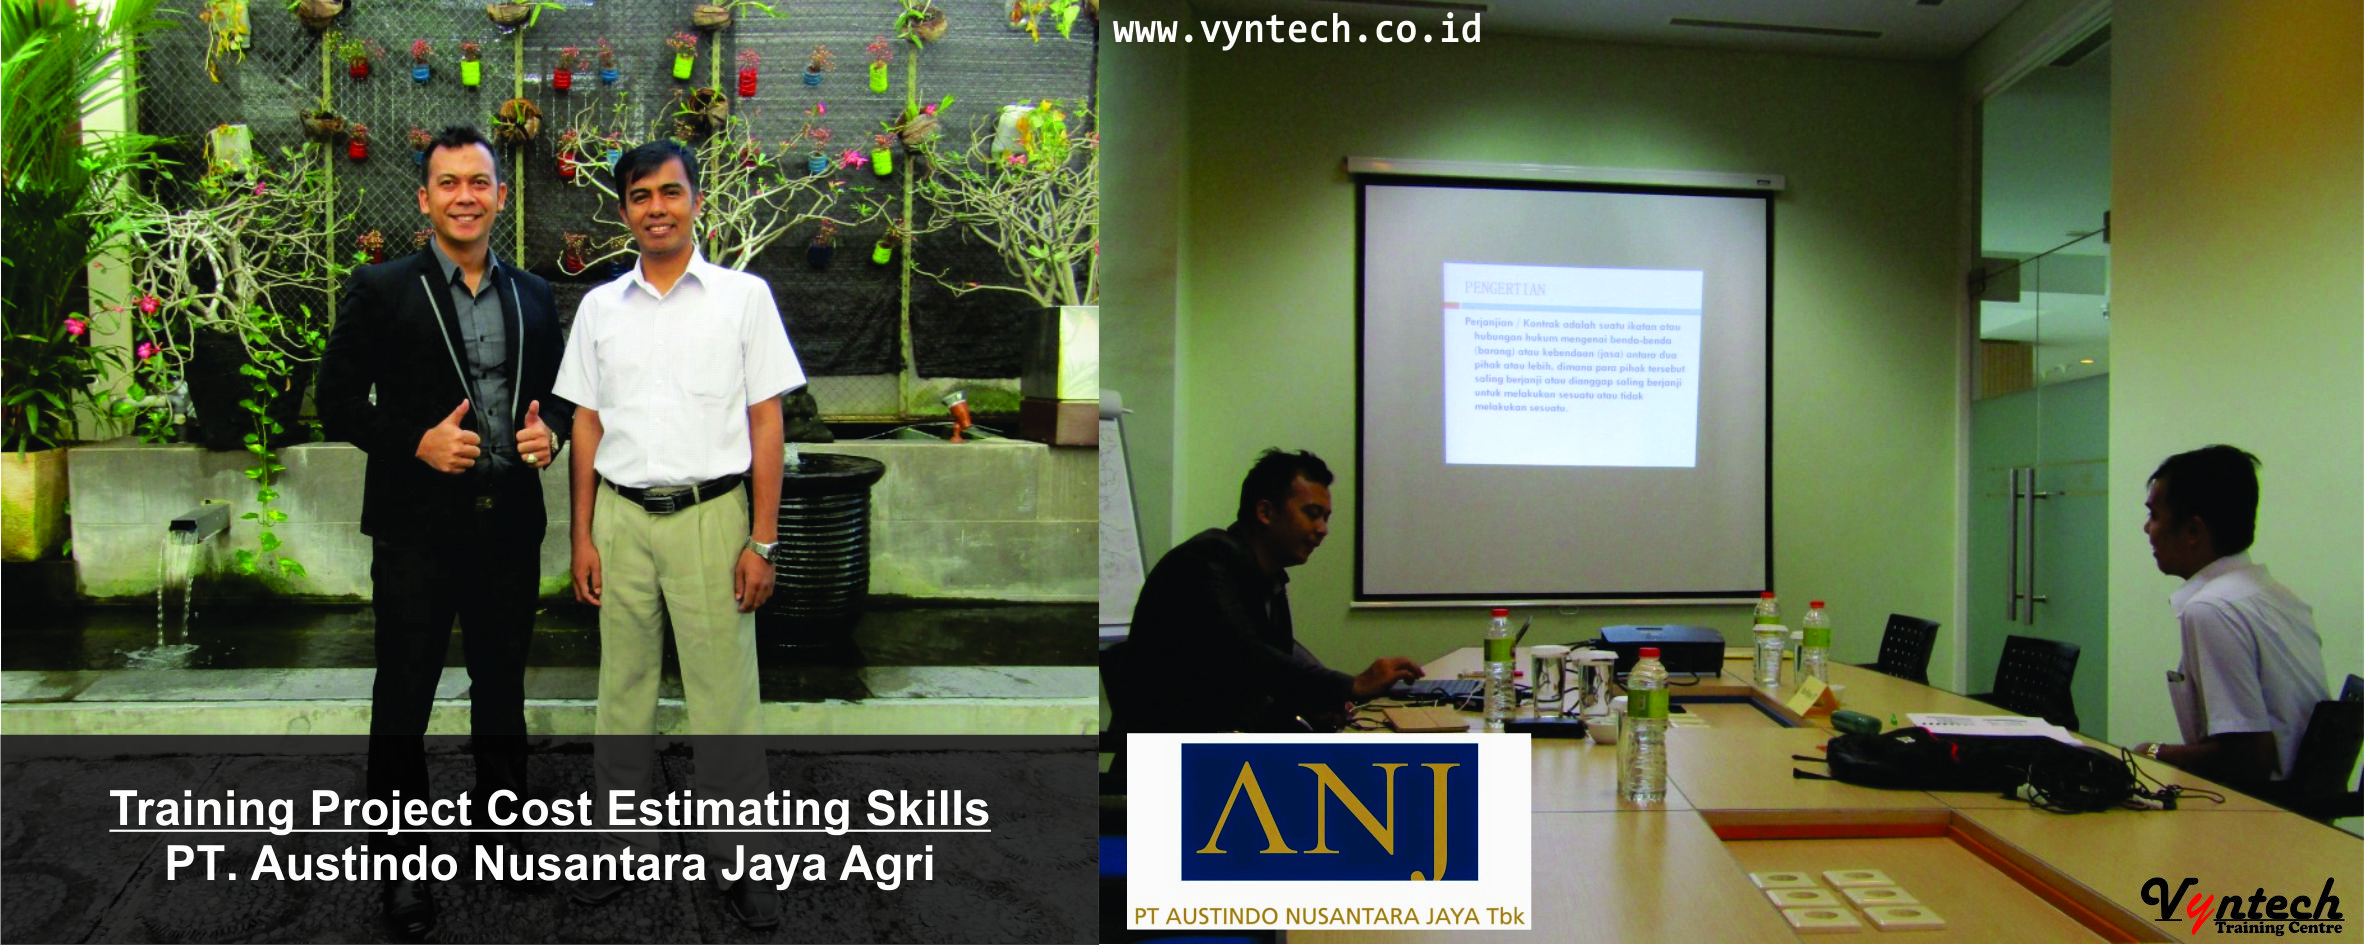 20170301 Training Project Cost Estimating Skills - PT. Austindo Nusantara Jaya Agri